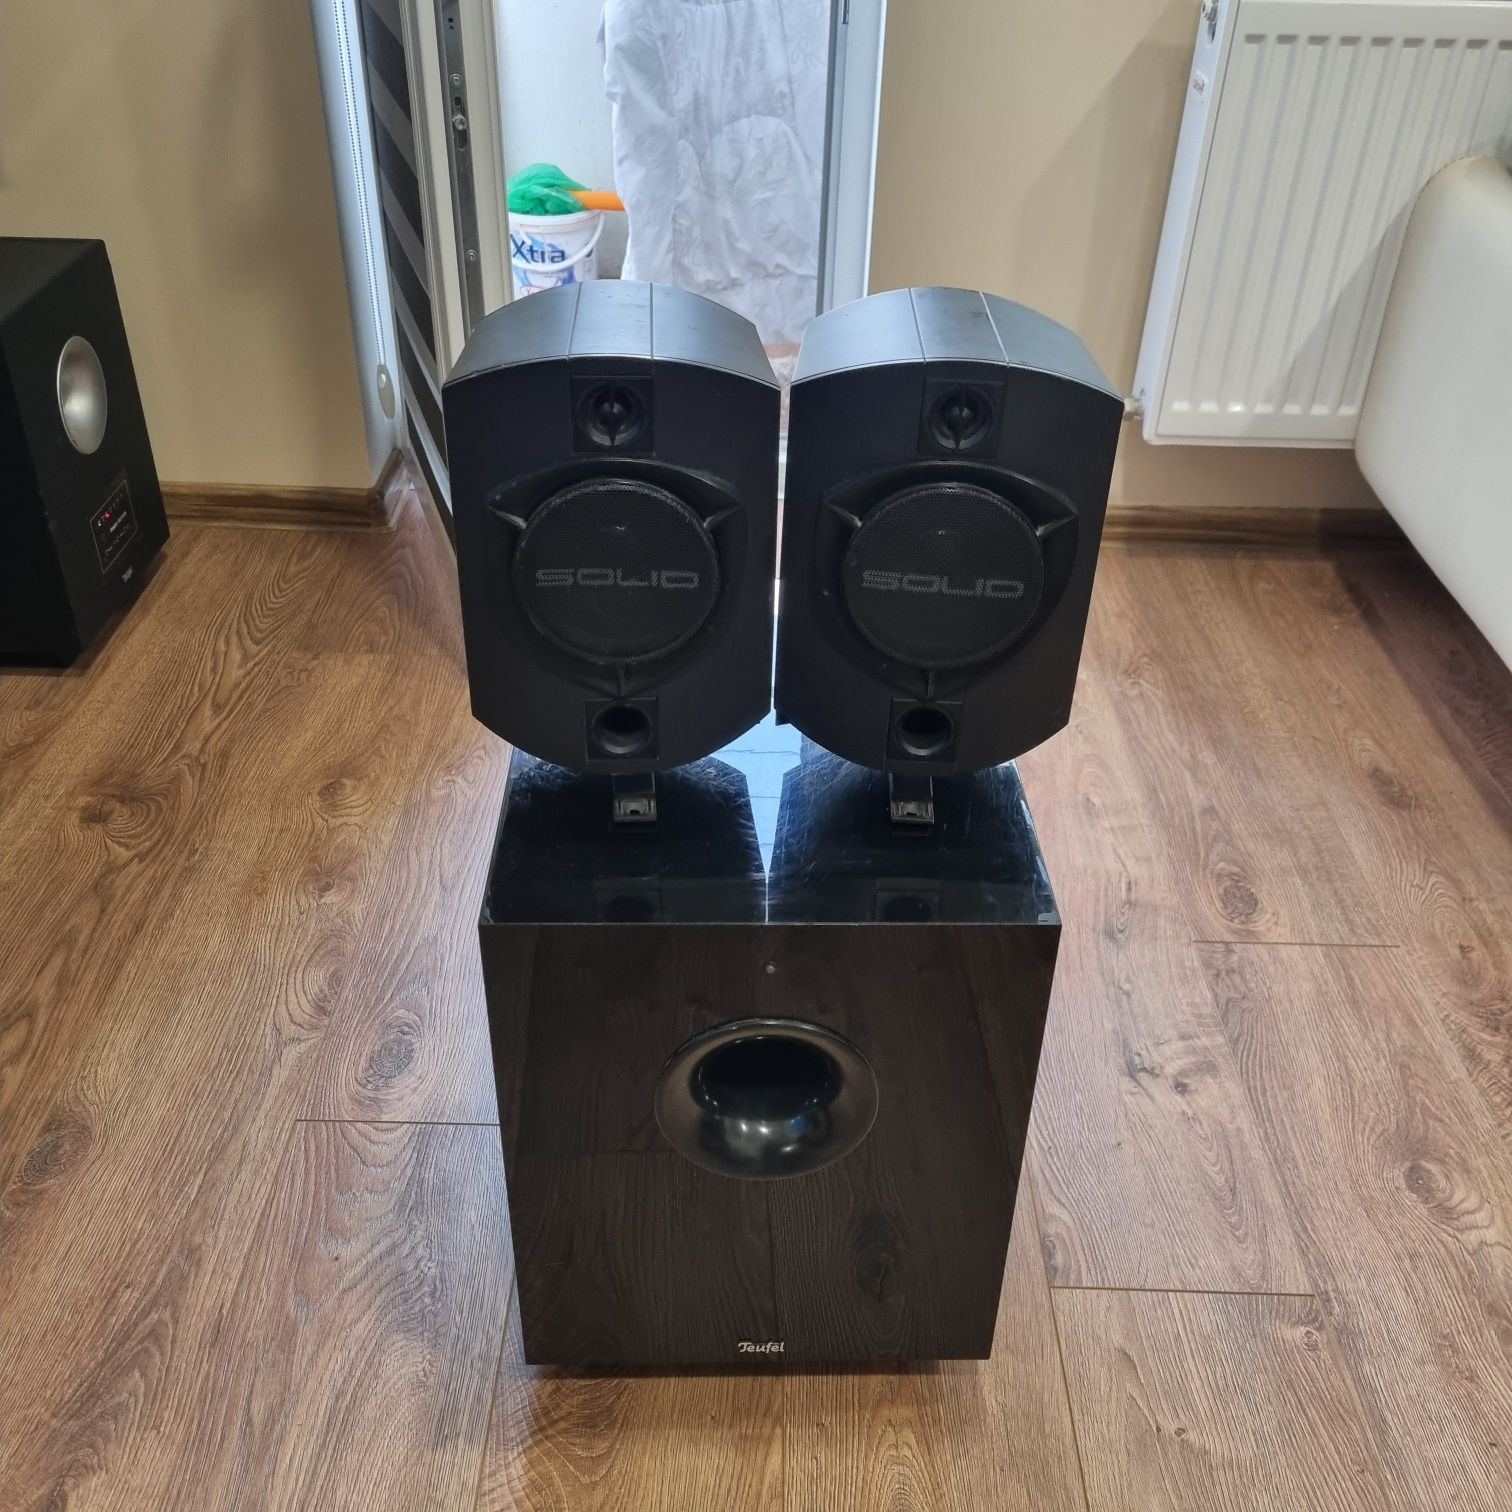 B&W solid speakers